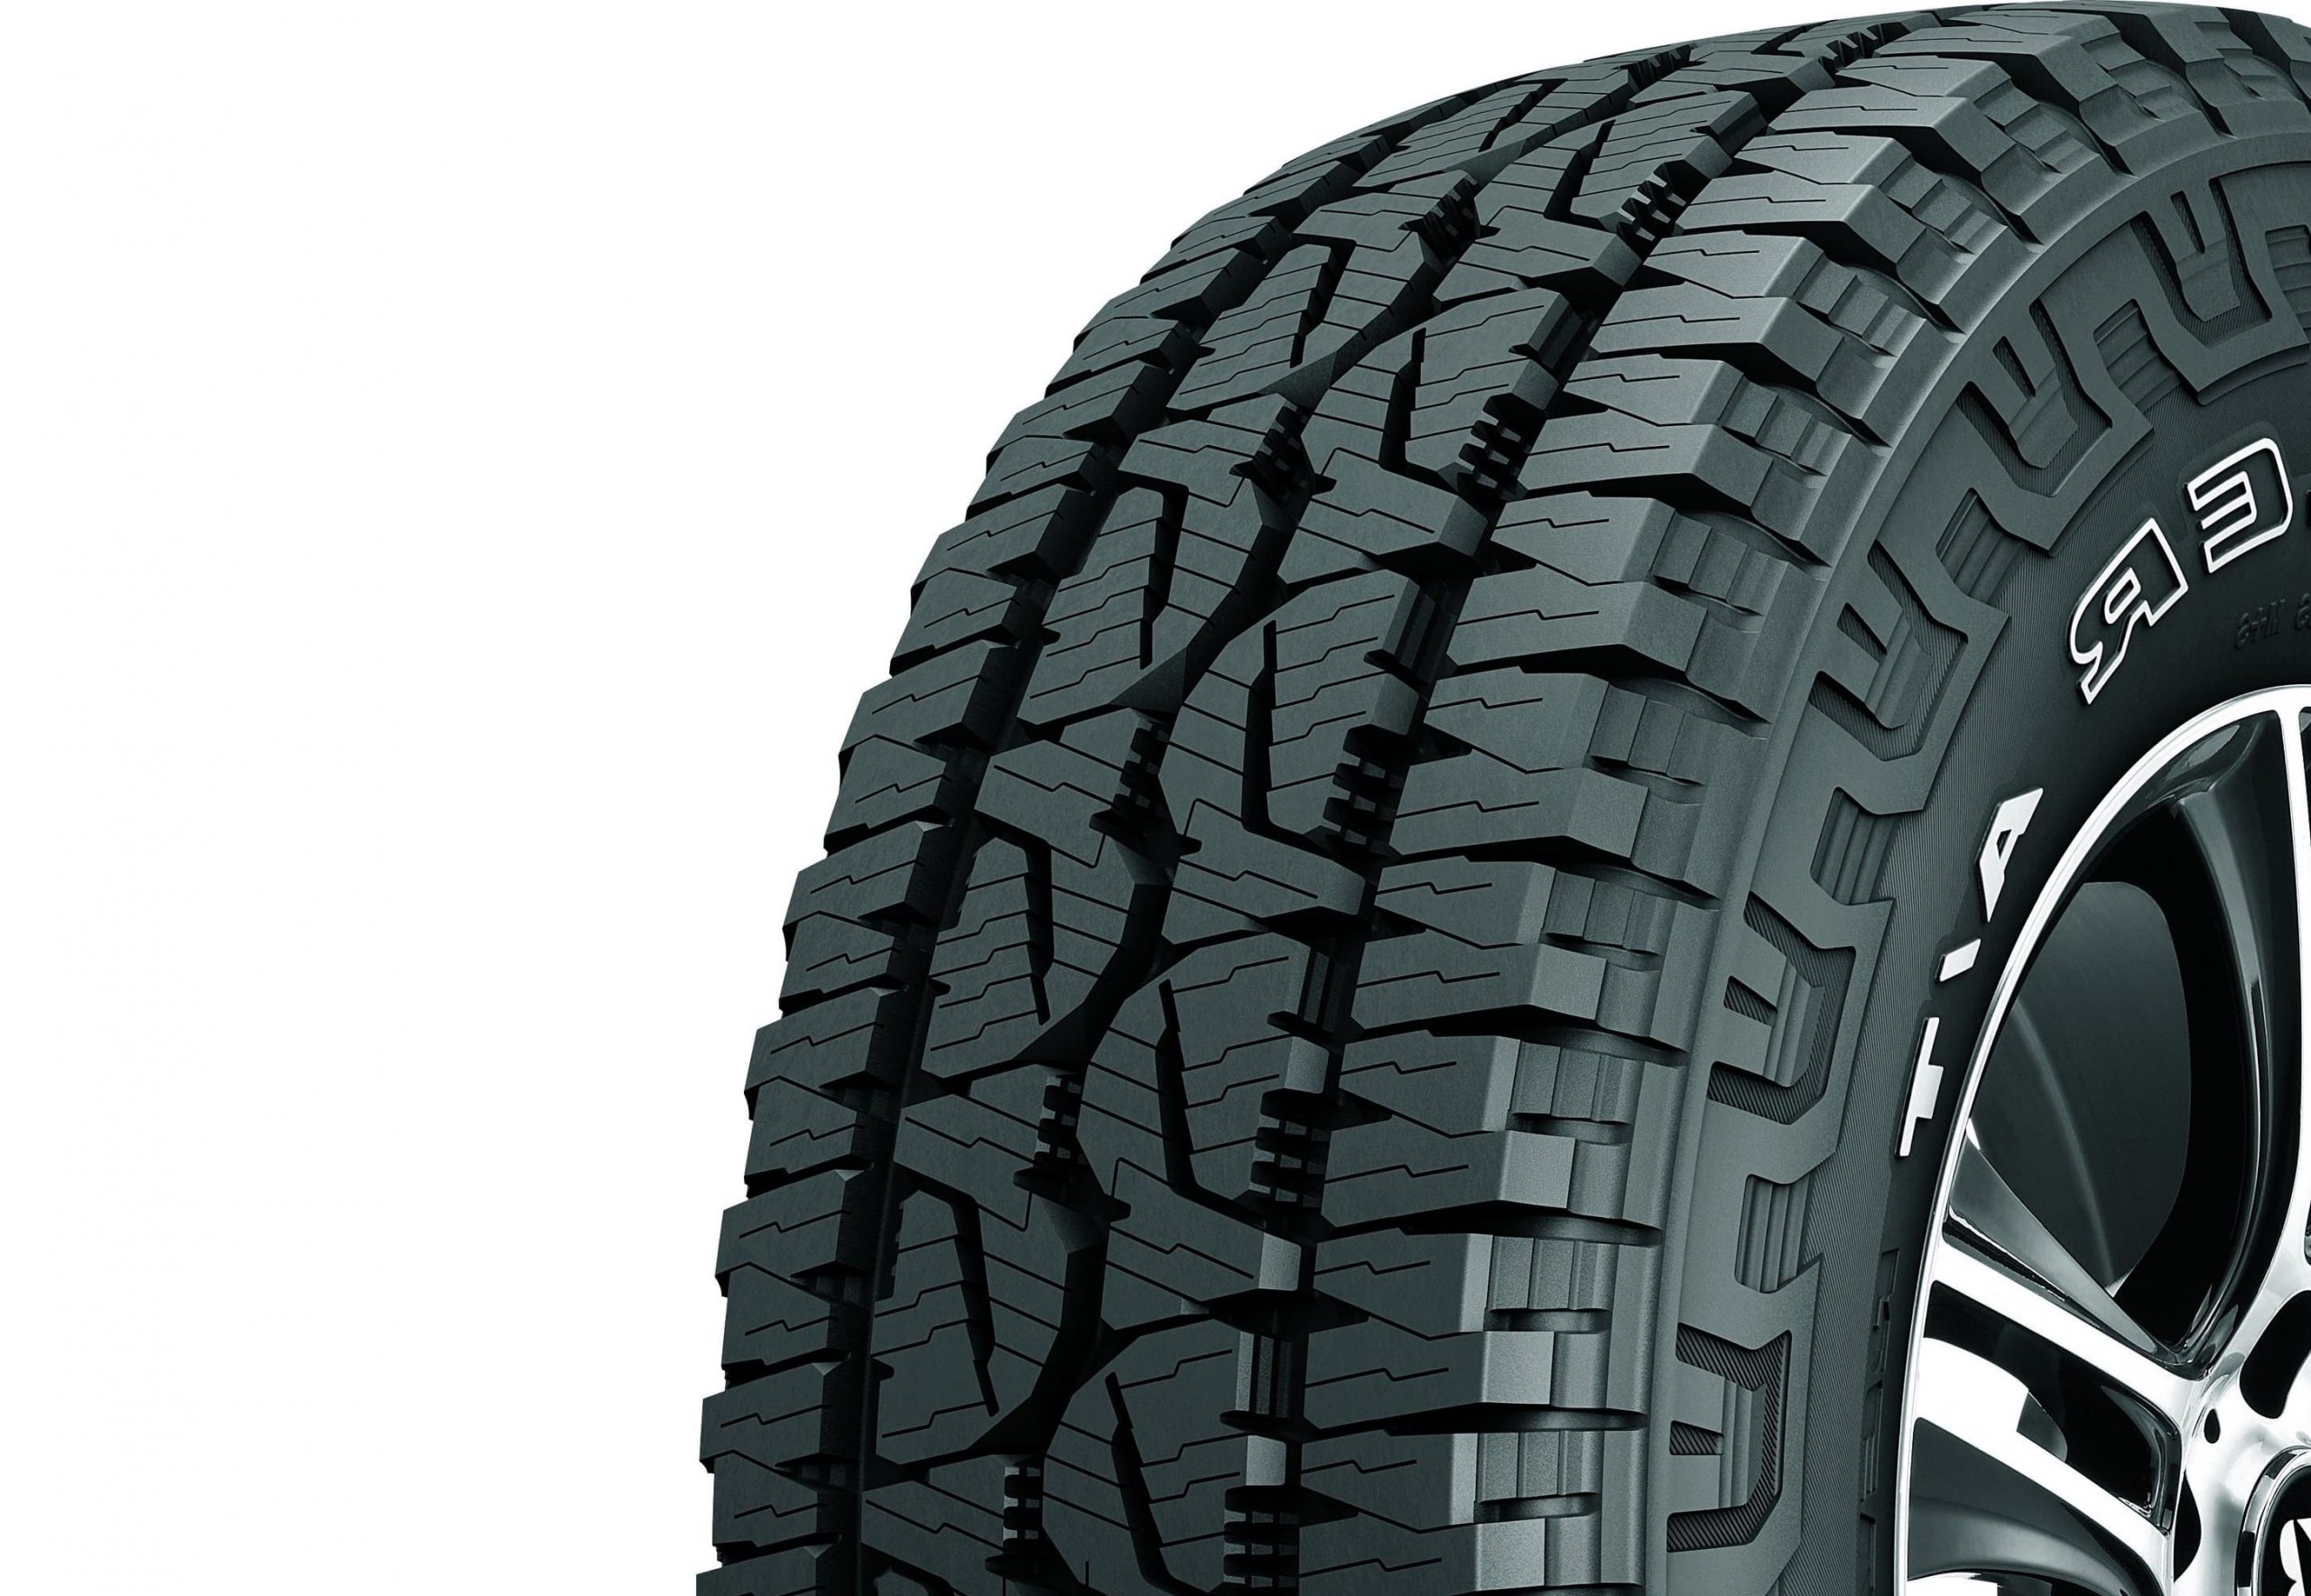 Bridgestone Dueler A T Revo 3 Tire Review Tire Space Tires Reviews 